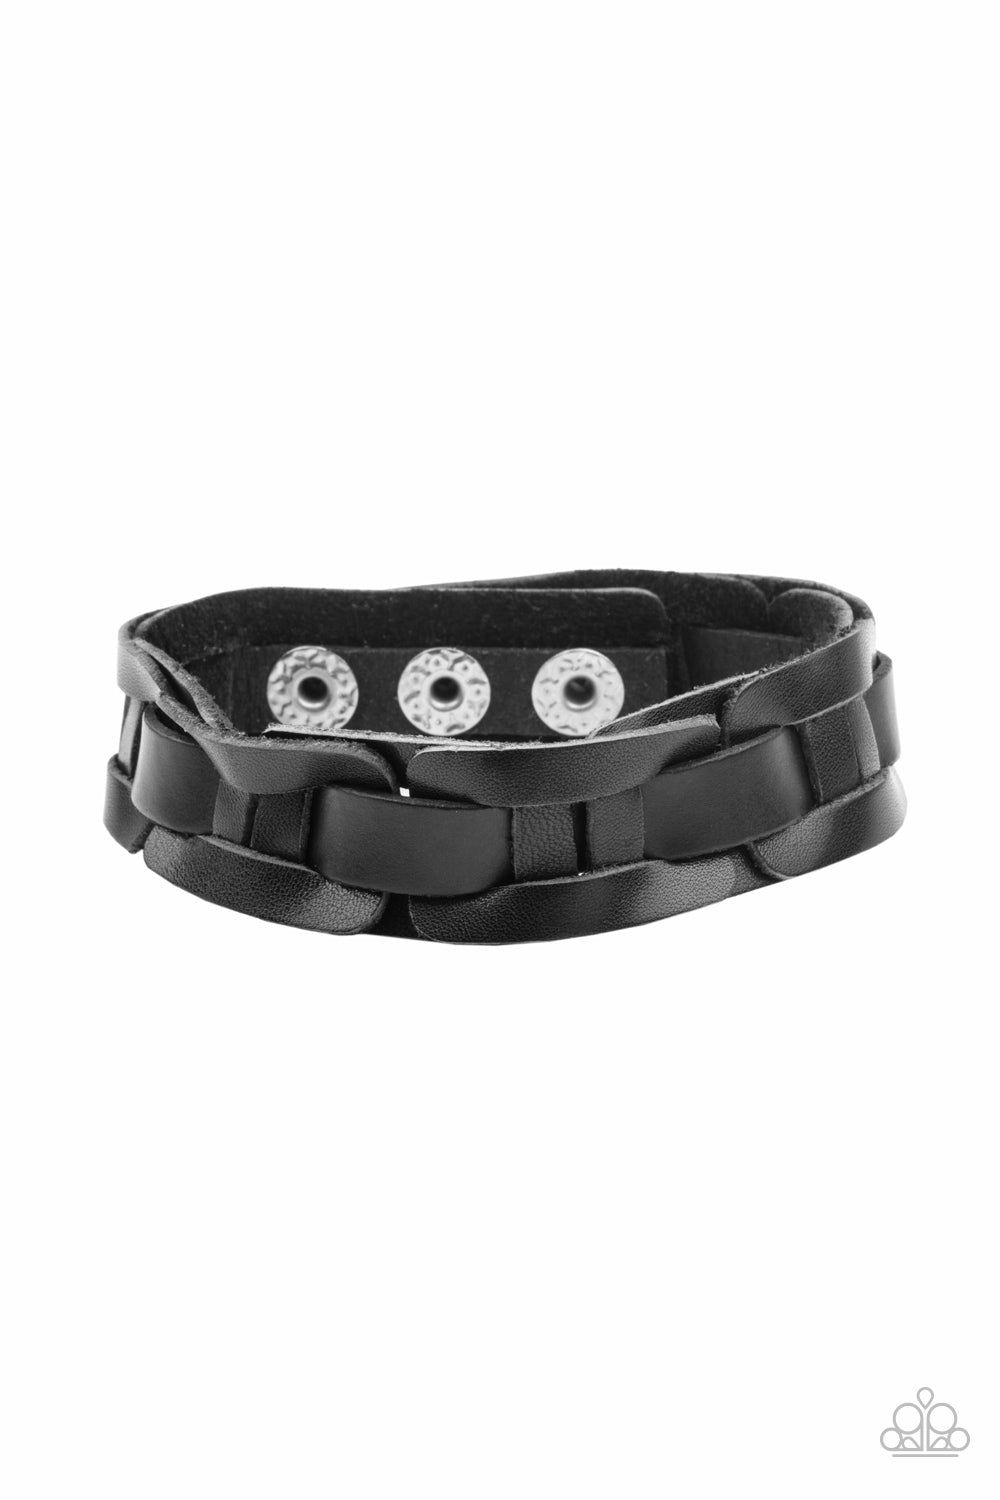 Garage Band Grunge Men&#39;s Black Leather Wrap Snap Bracelet - Paparazzi Accessories